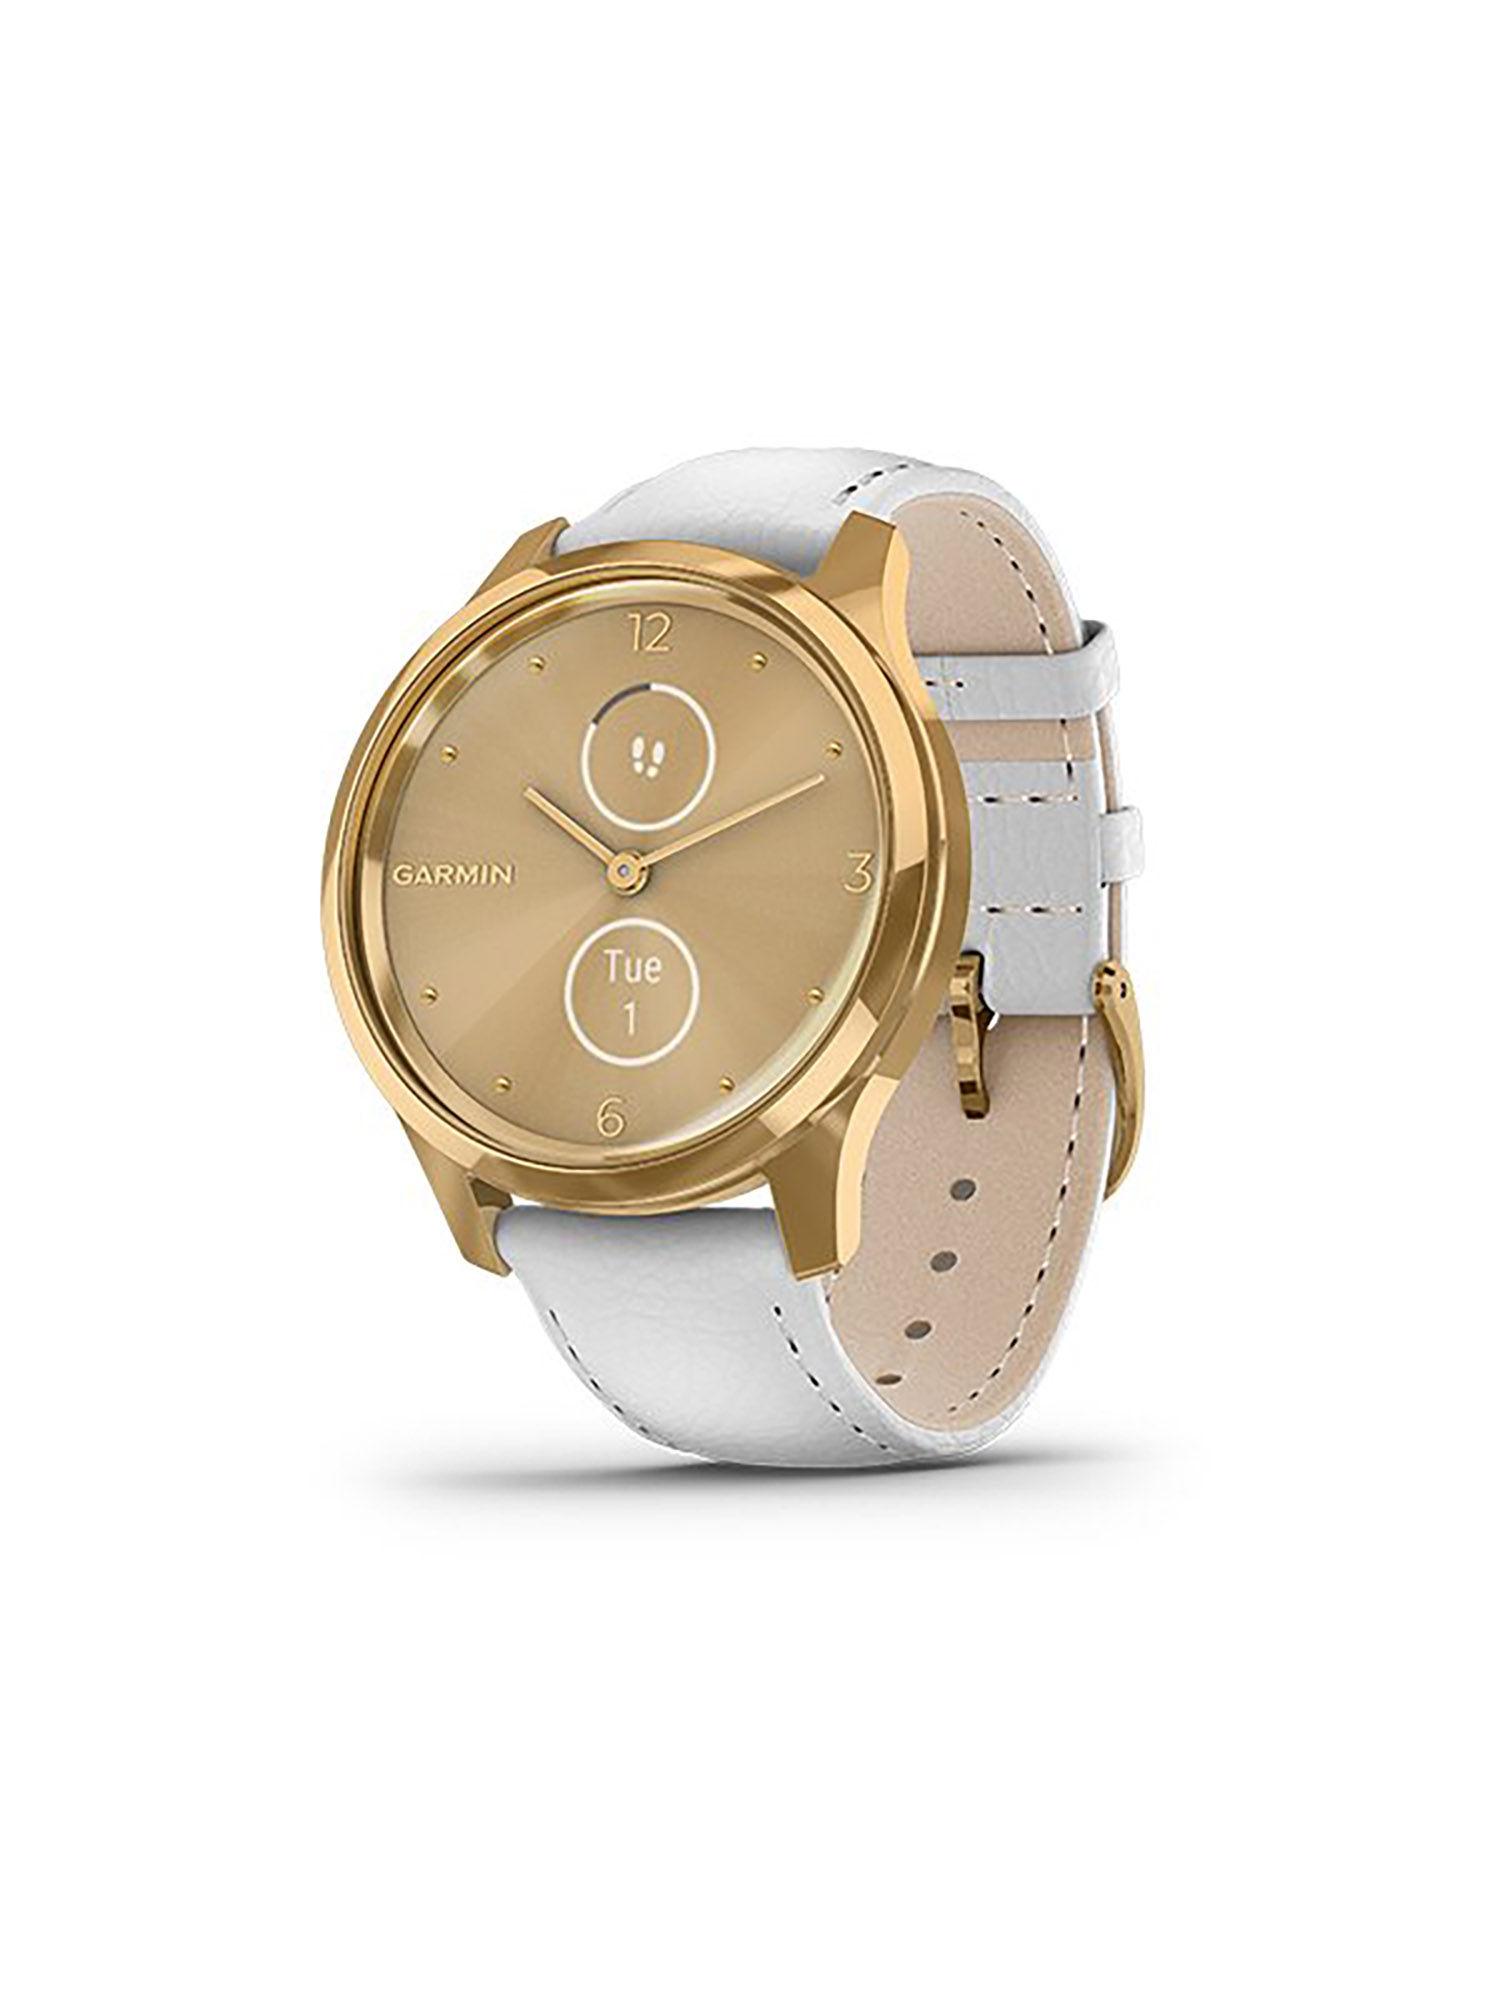 Vivomove Luxe-Gold-White Smart Watch